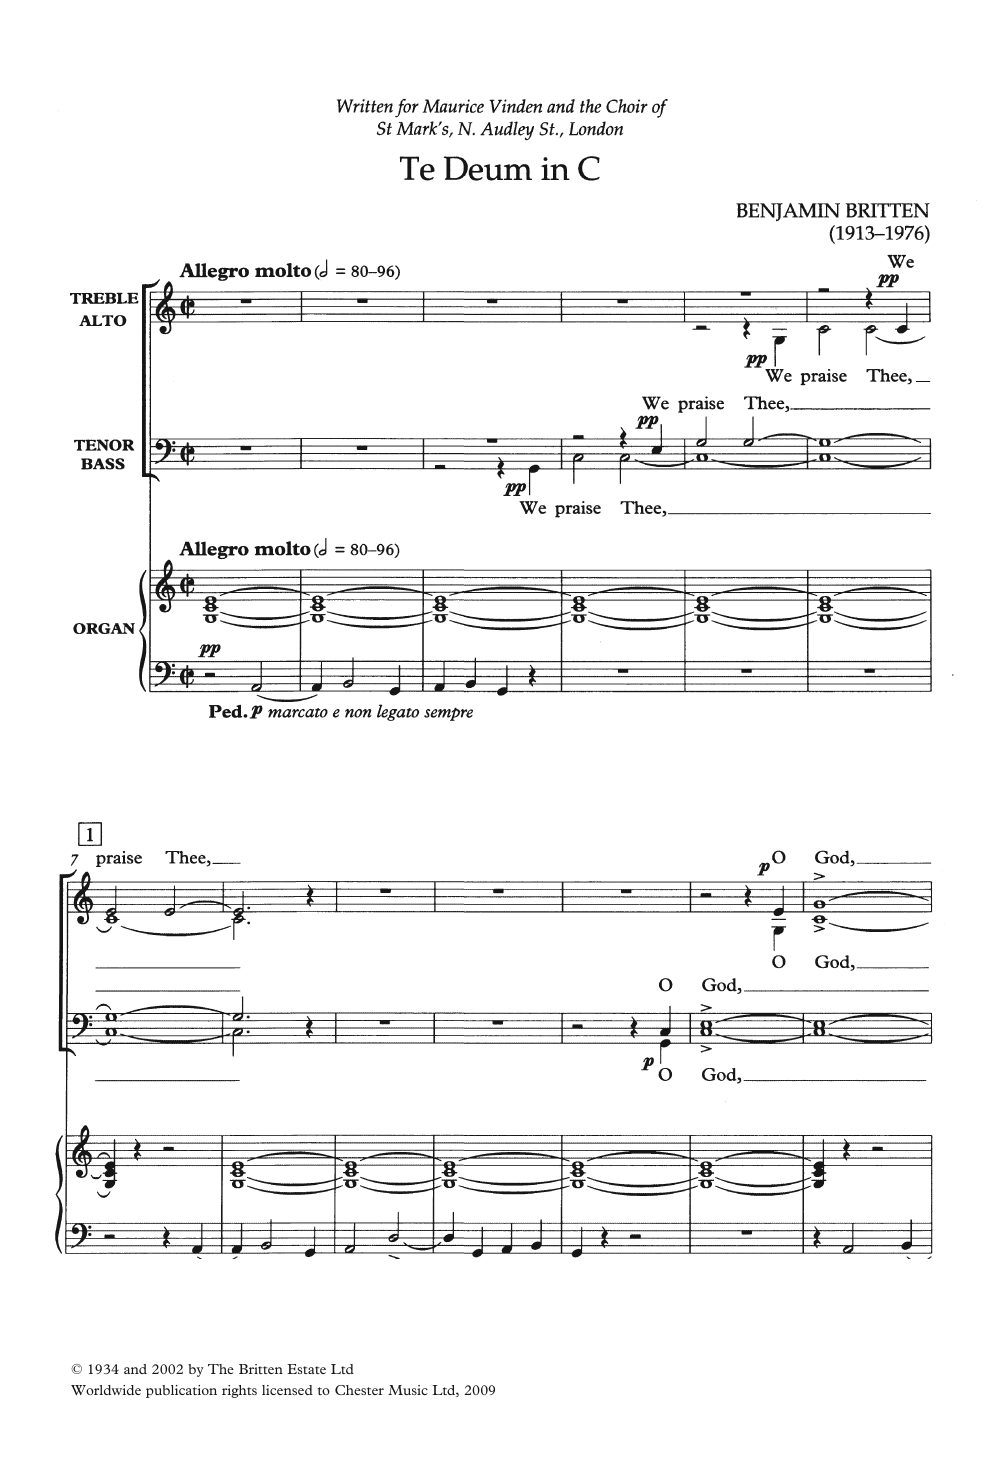 Benjamin Britten Te Deum In C Sheet Music Notes & Chords for Choral - Download or Print PDF